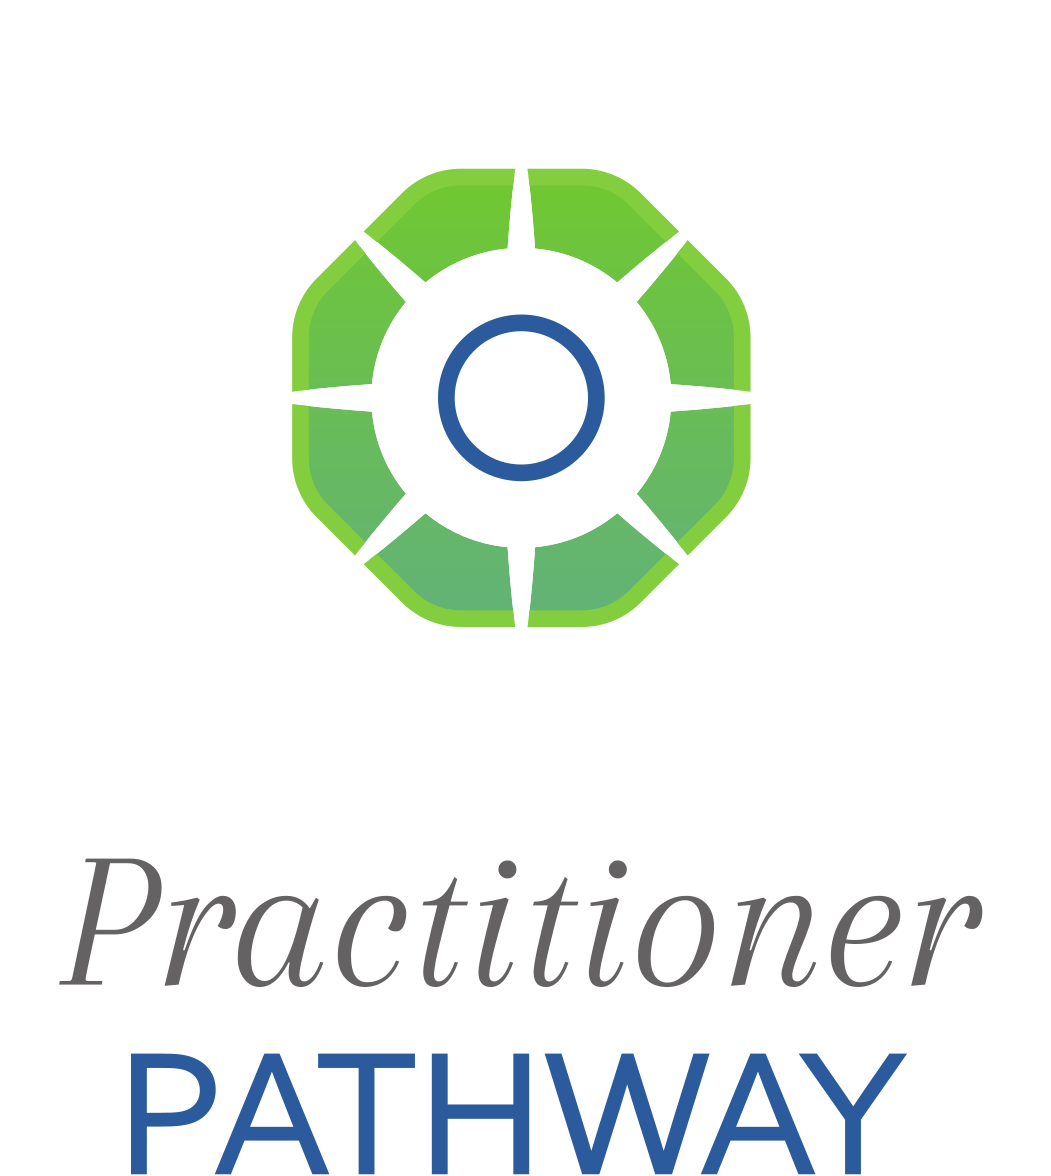 Evidence based practitioner conference logo